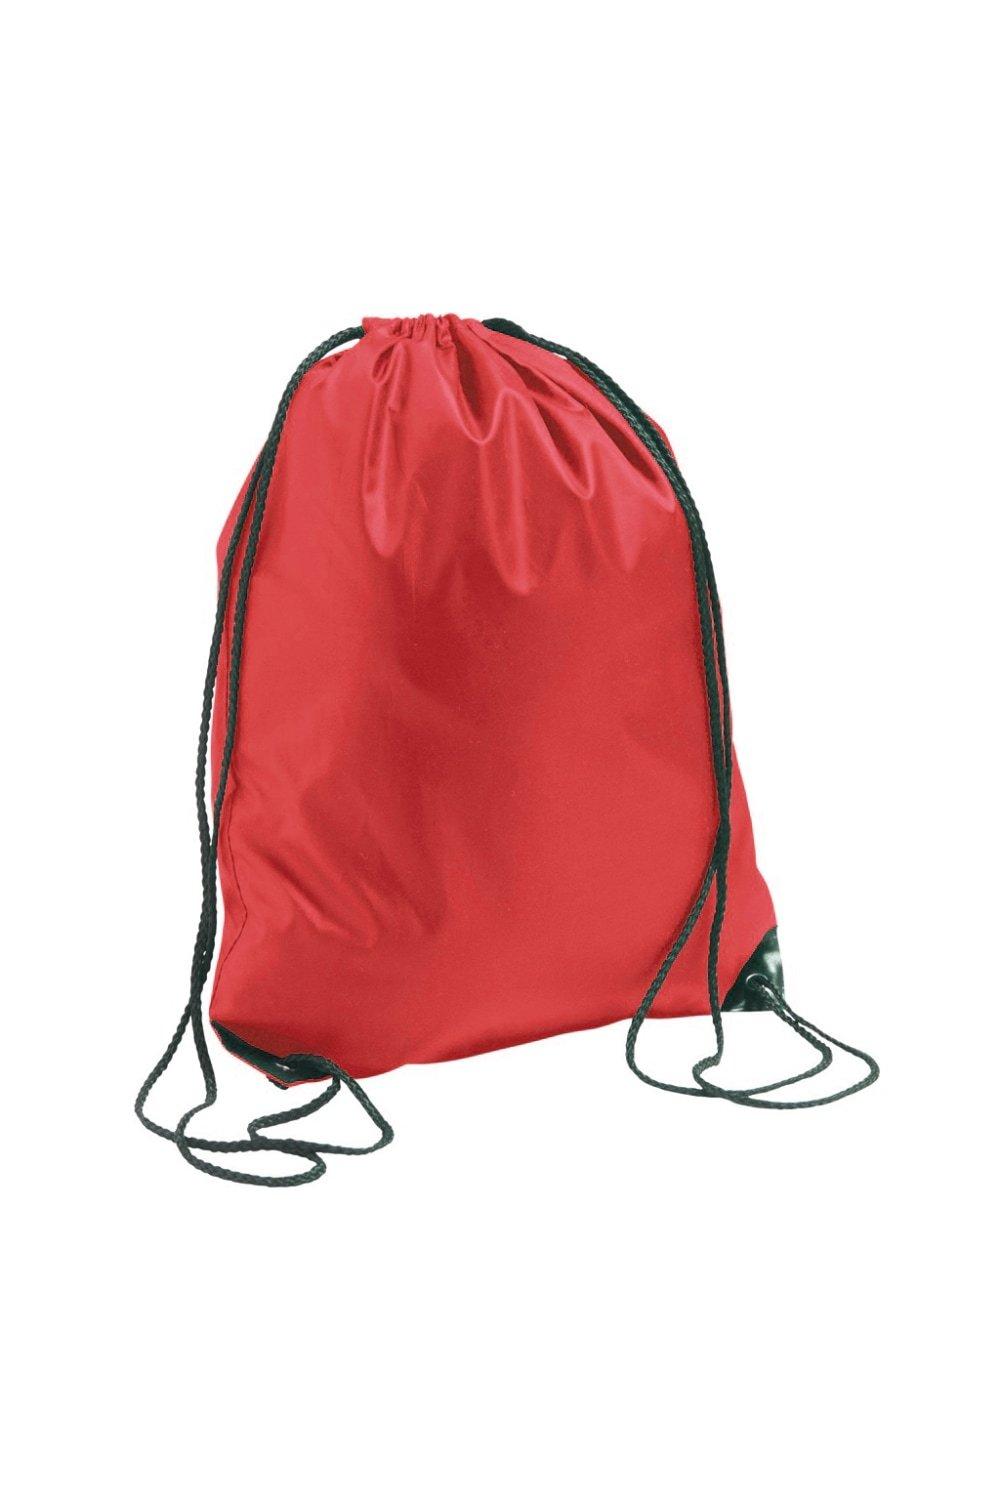 Сумка Urban Gymsac на шнурке SOL'S, красный сумка urban gymsac на шнурке sol s белый